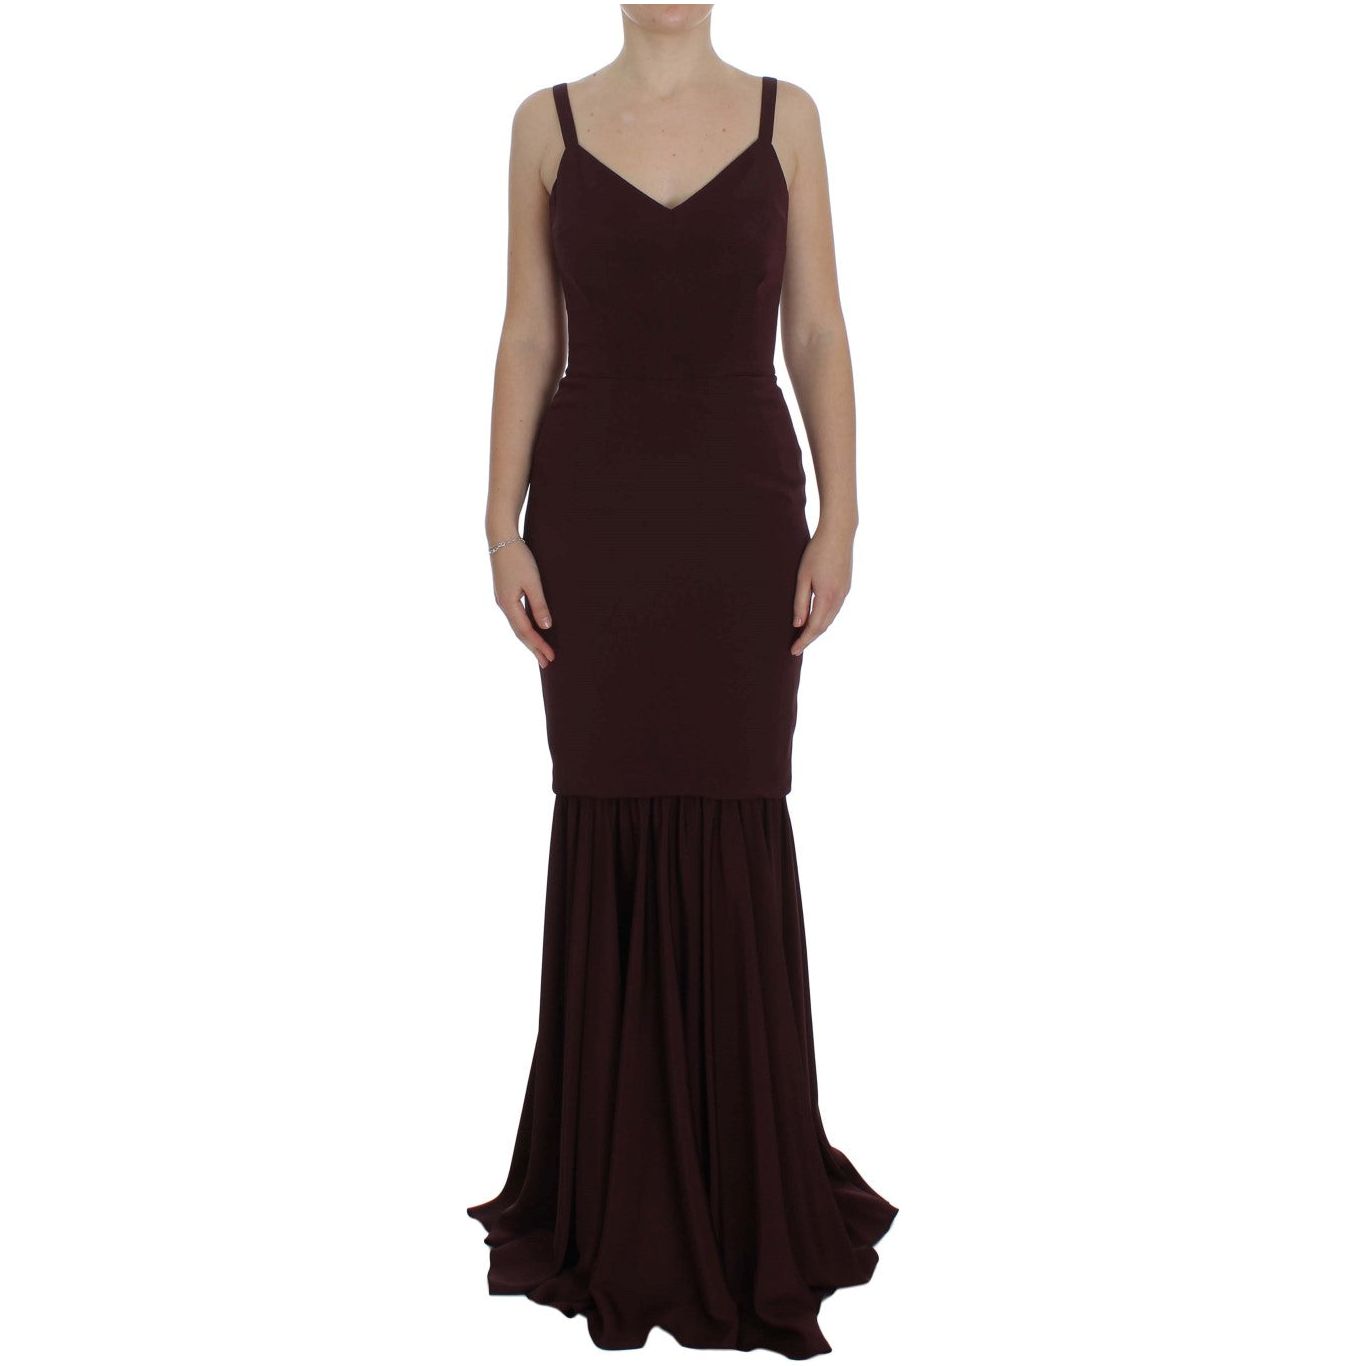 Dolce & Gabbana Elegant Bordeaux Sheath Dress bordeaux-stretch-full-length-sheath-dress 76636-bordeaux-stretch-full-length-sheath-dress.jpg